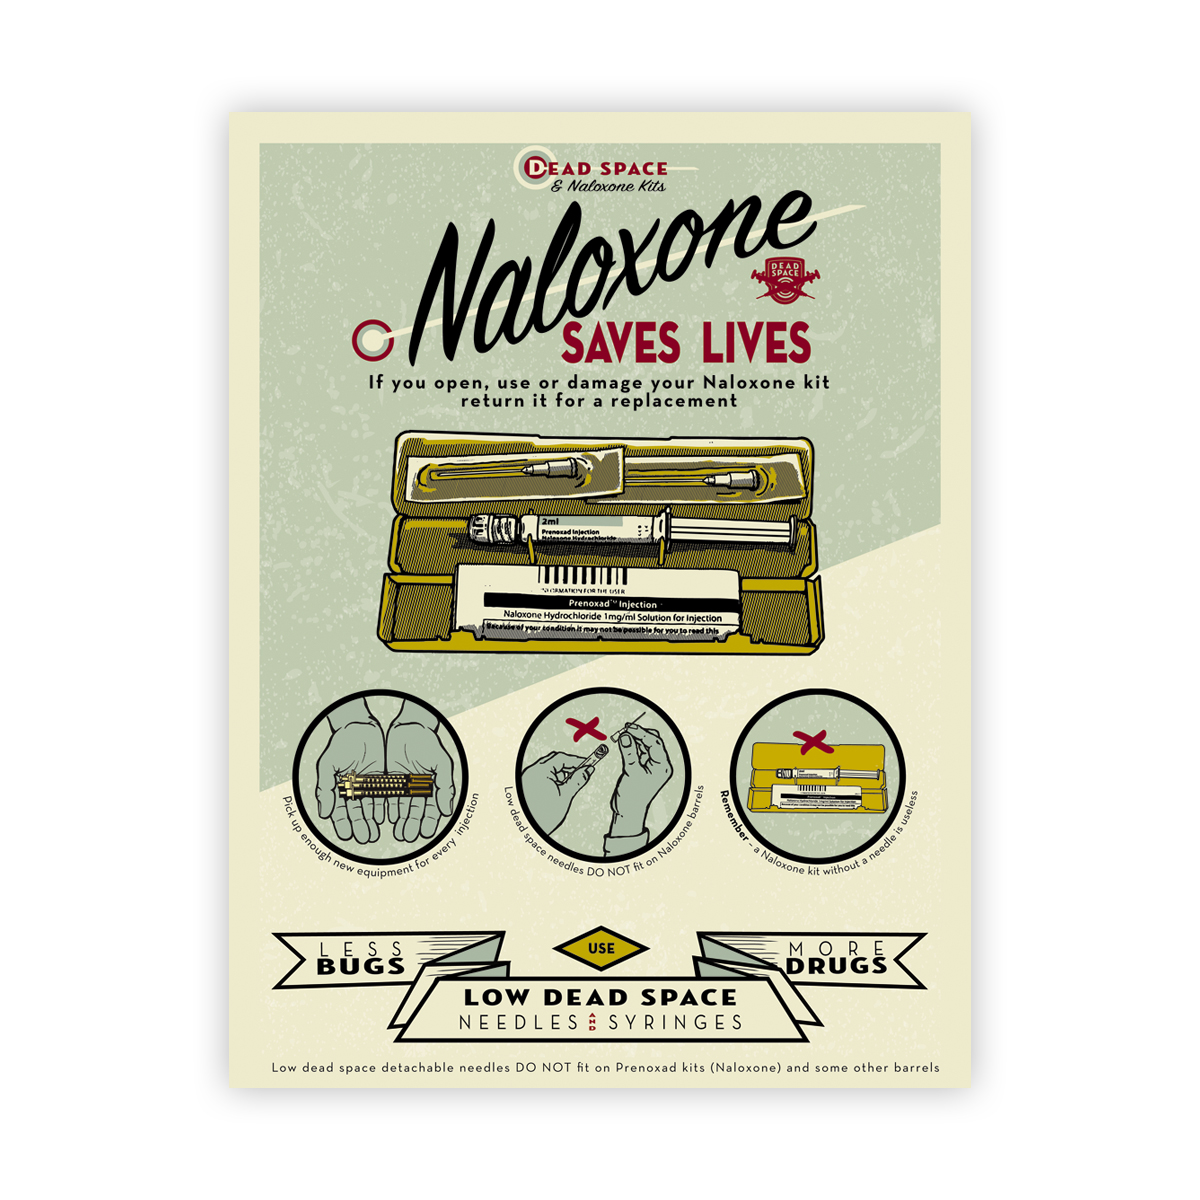 Naloxone saves lives poster